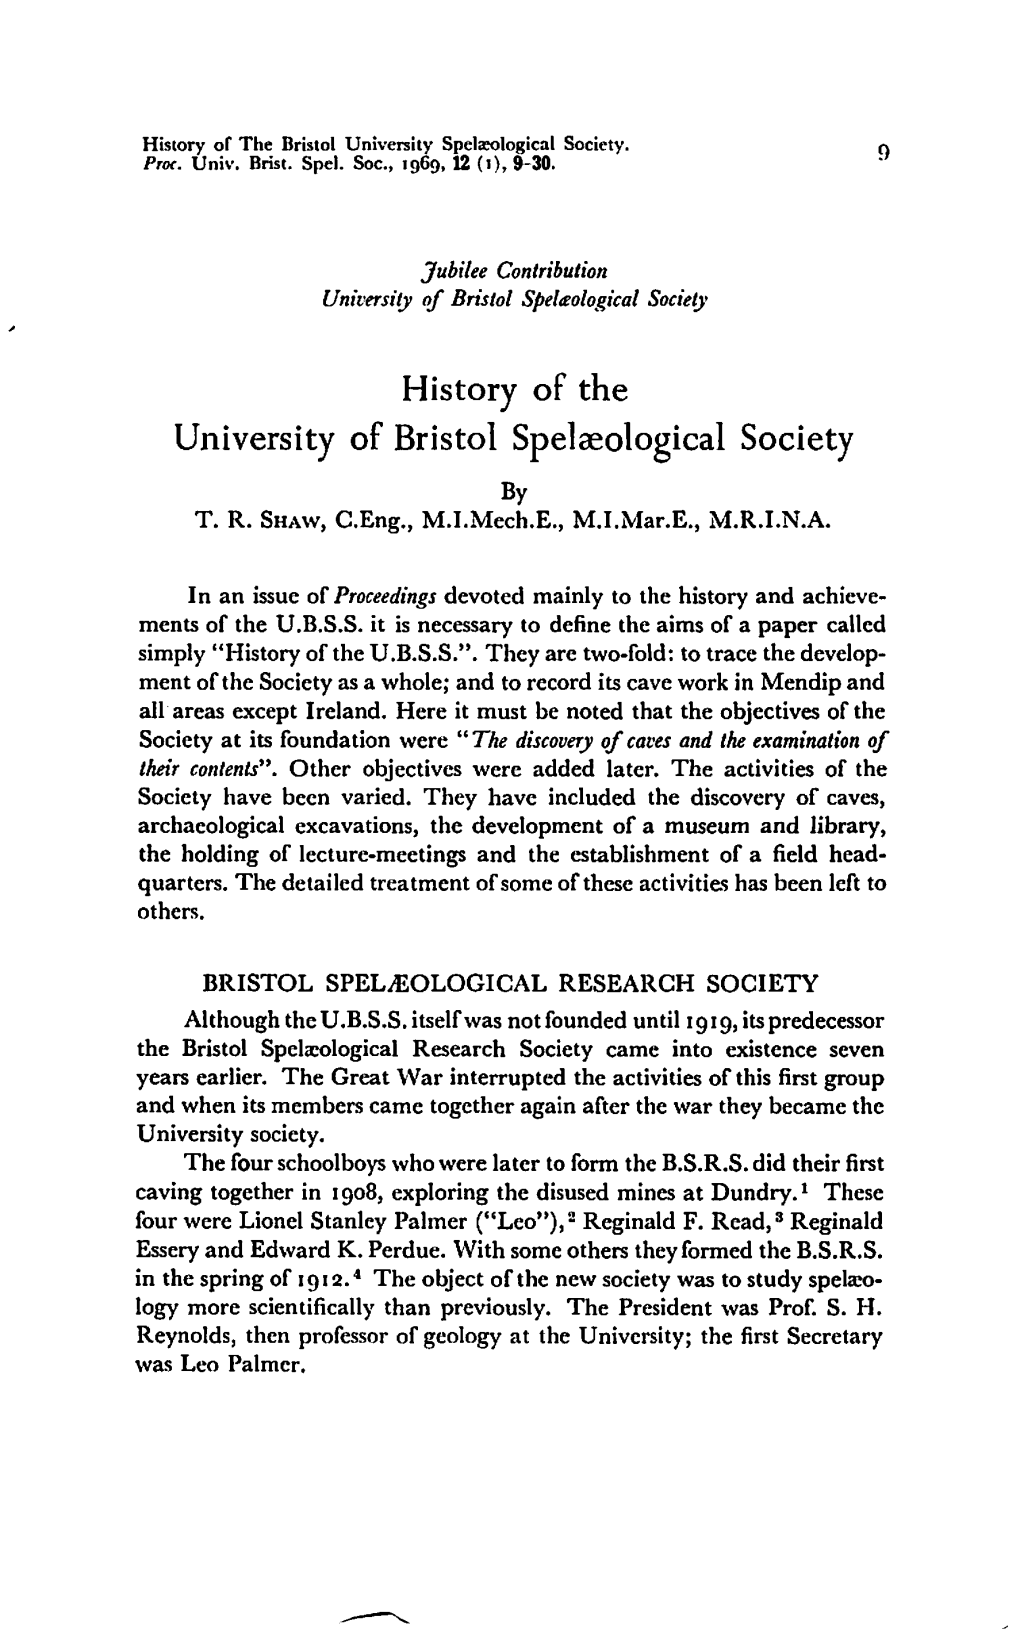 History of the University of Bristol Spelaeological Society